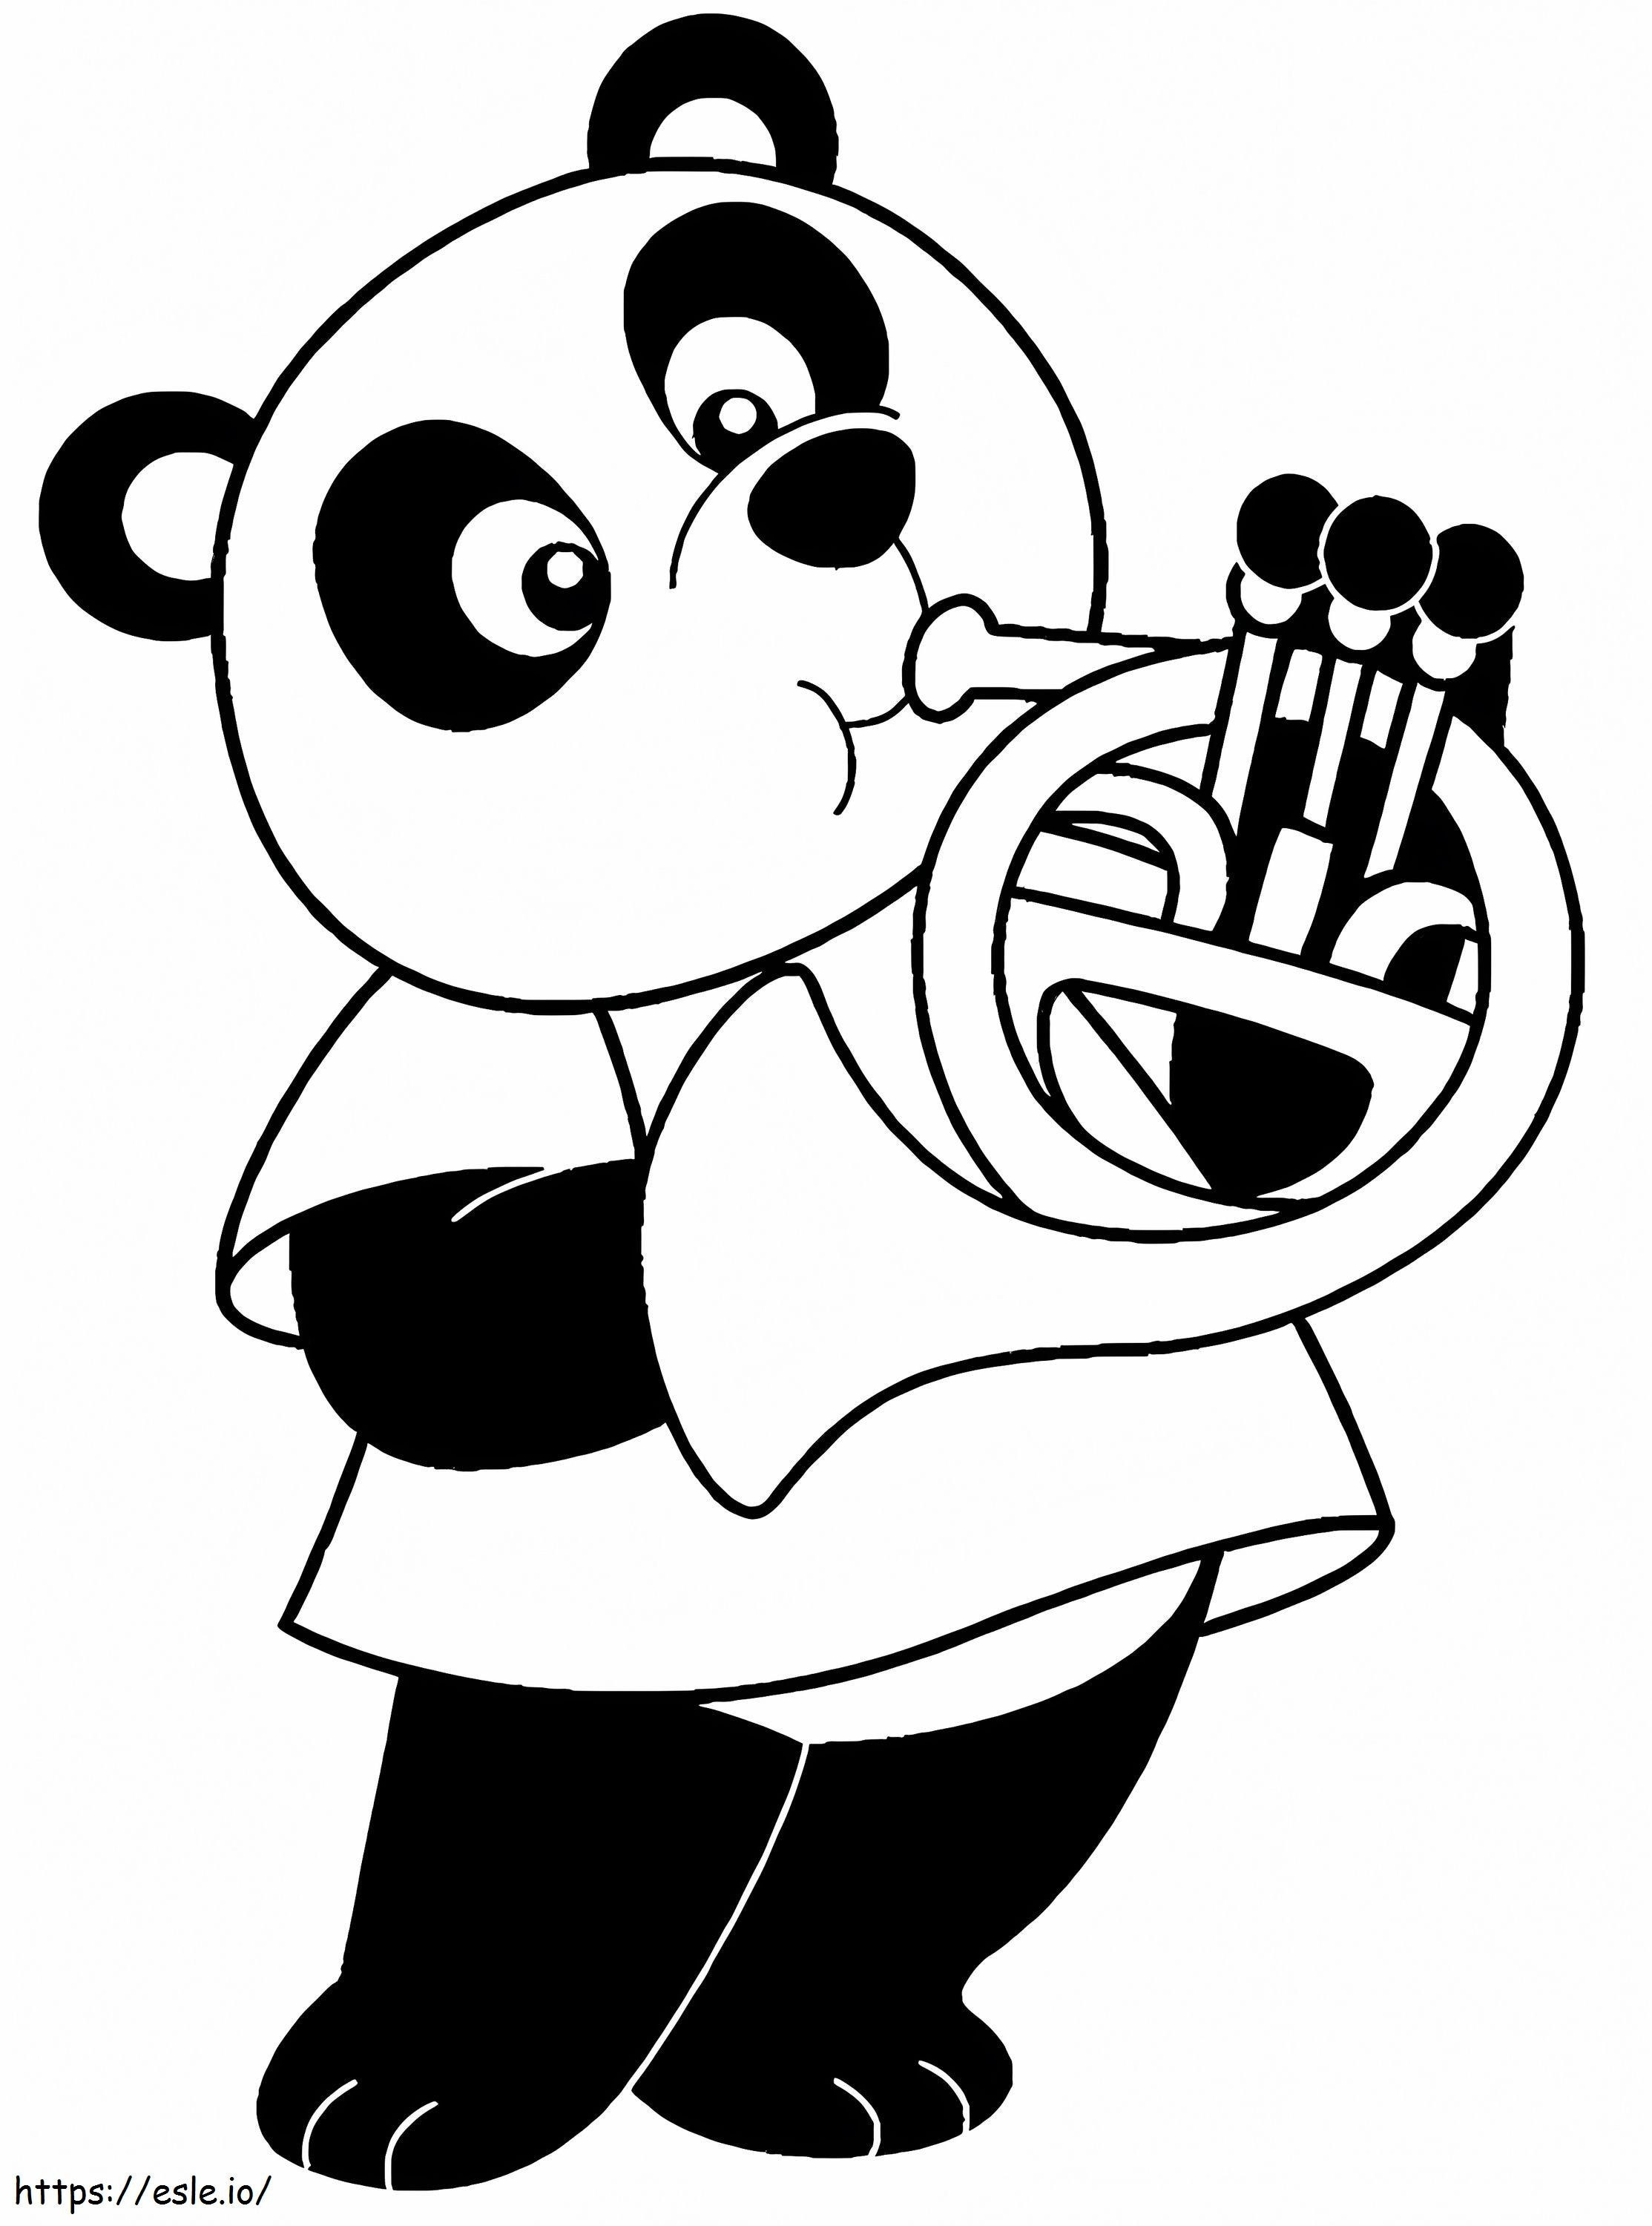 Panda soprando trombeta para colorir